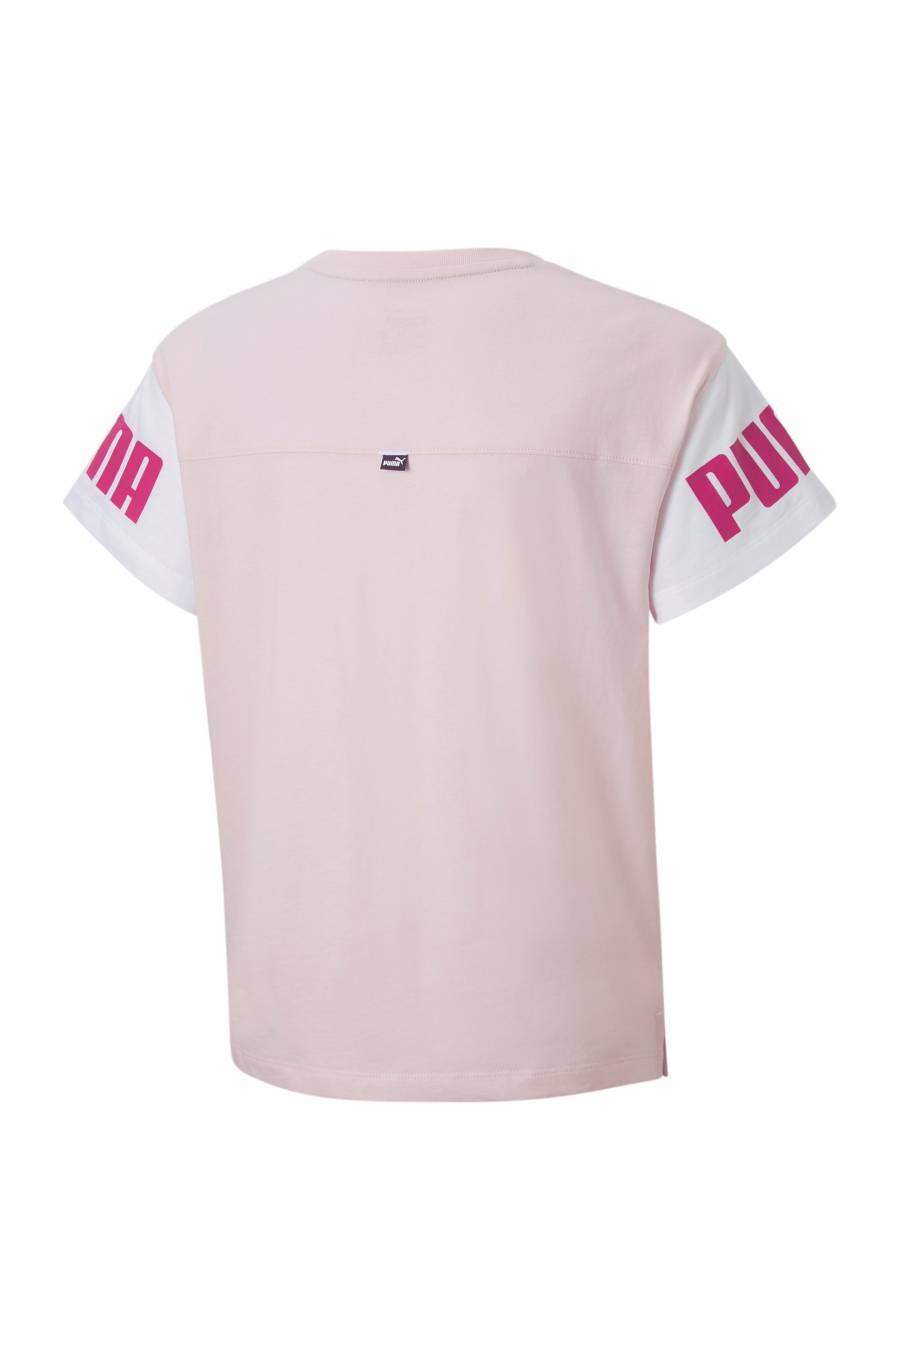 Camiseta Puma Power Colorblock 849073-16 - msdsport